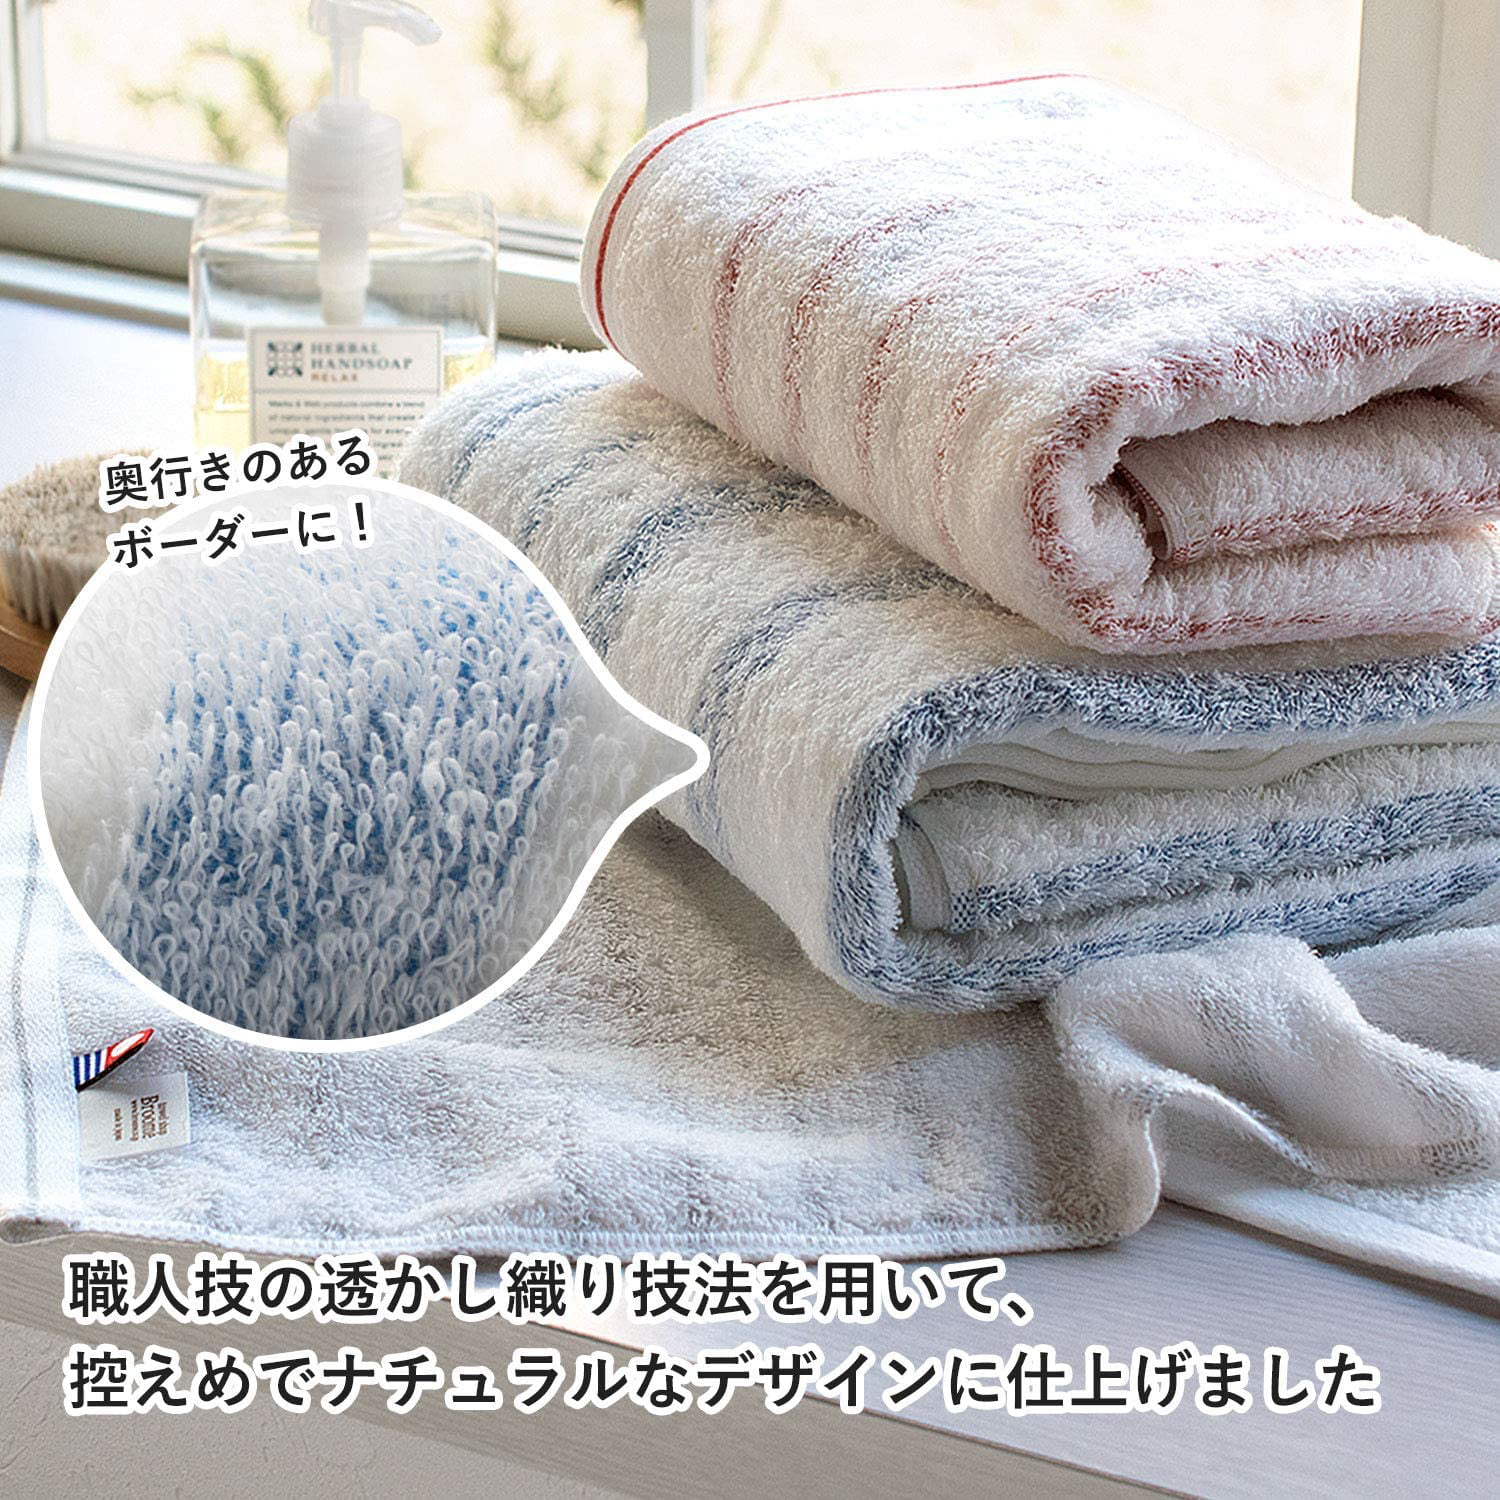 Imabari CYBERL Oruta Bath Towel Stripe; Set Of 2 Blue F/S w/Tracking# Japan 